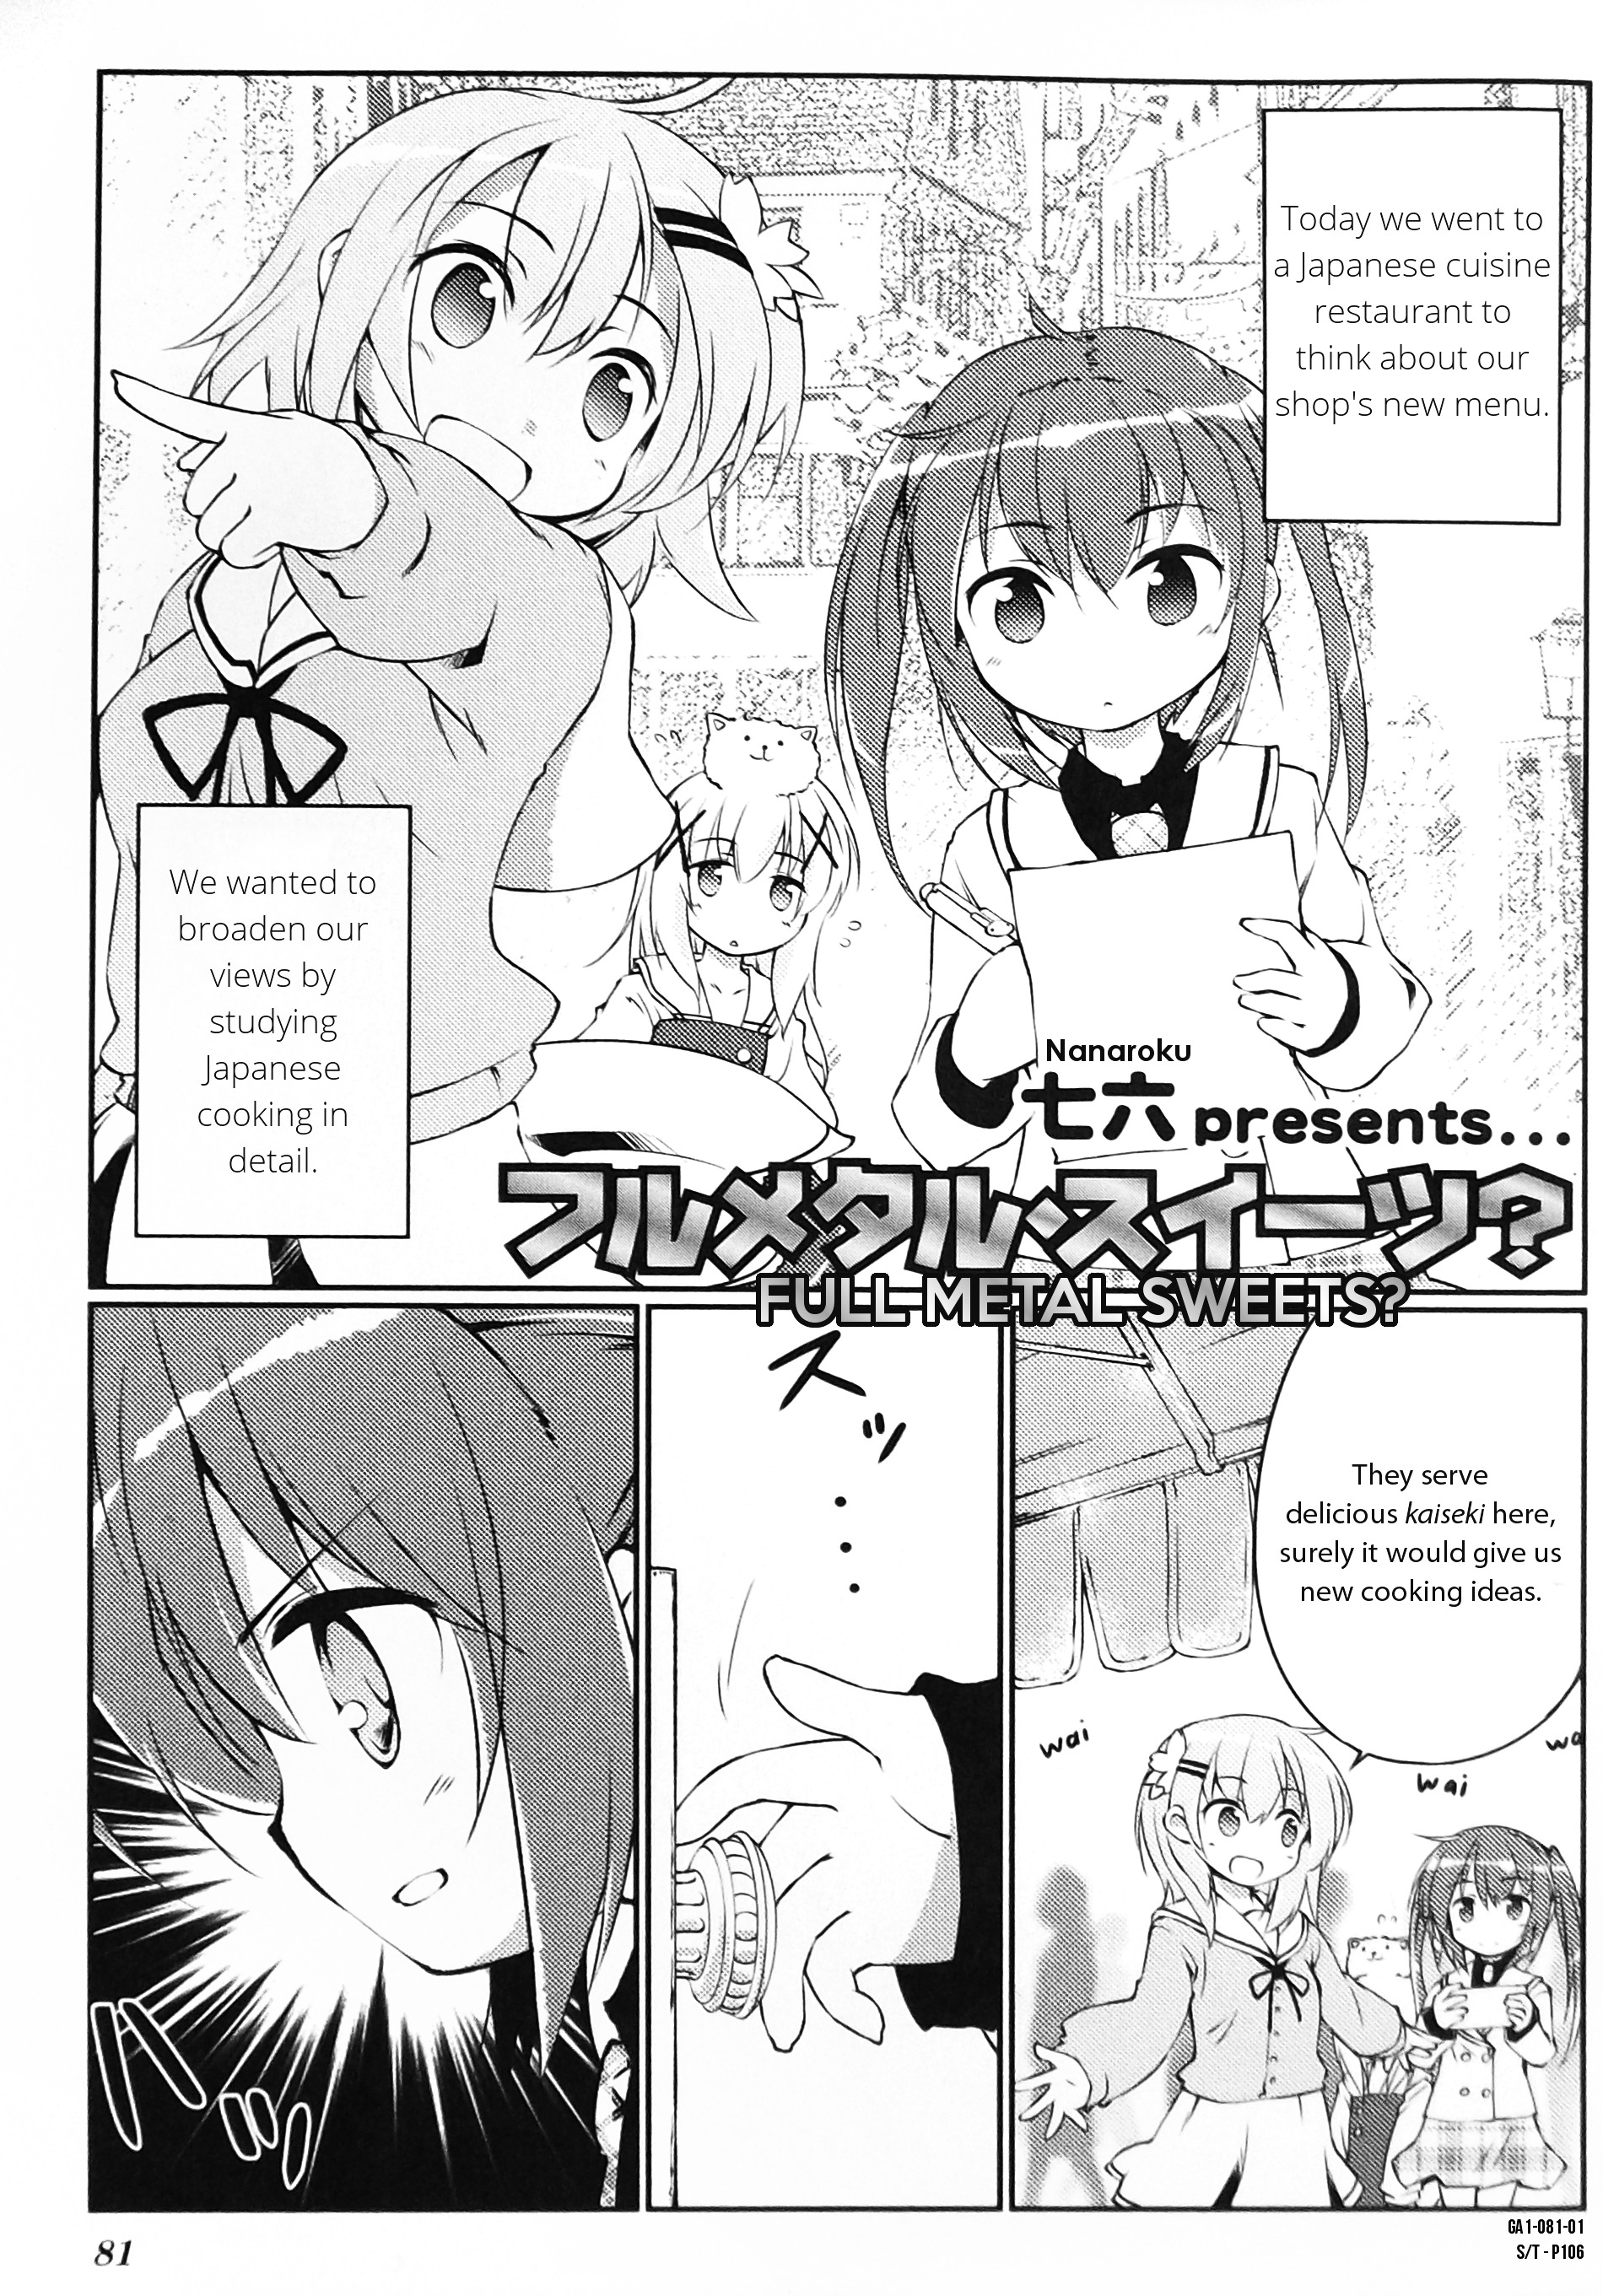 Gochuumon Wa Usagi Desu Ka? Anthology Comic Vol.1 Chapter 11 : Full Metal Sweets? [By: Nanaroku] - Picture 1